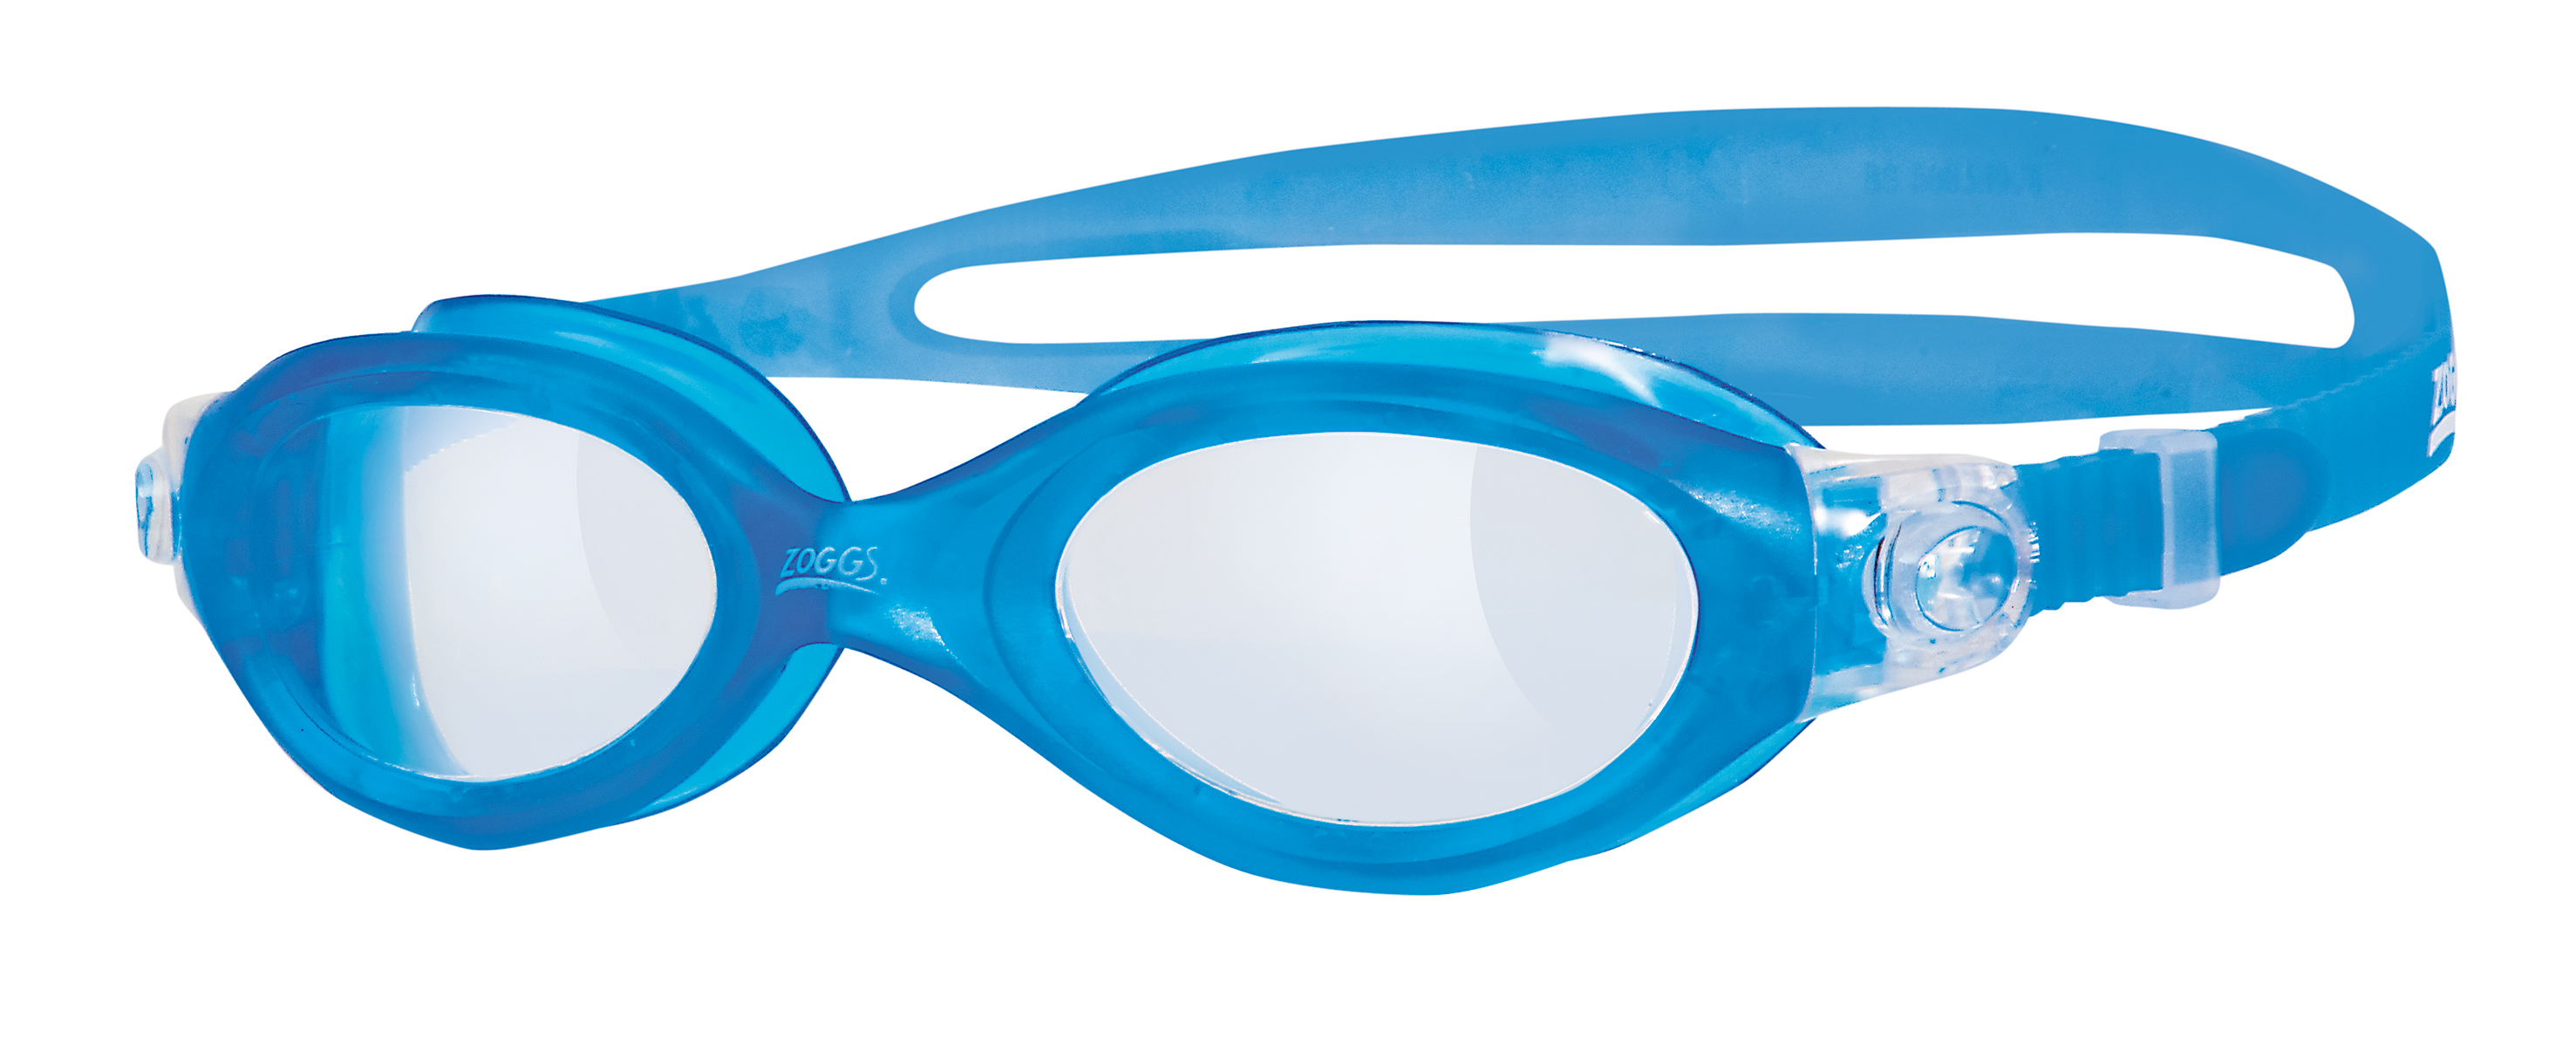 Athena Swimming Goggles